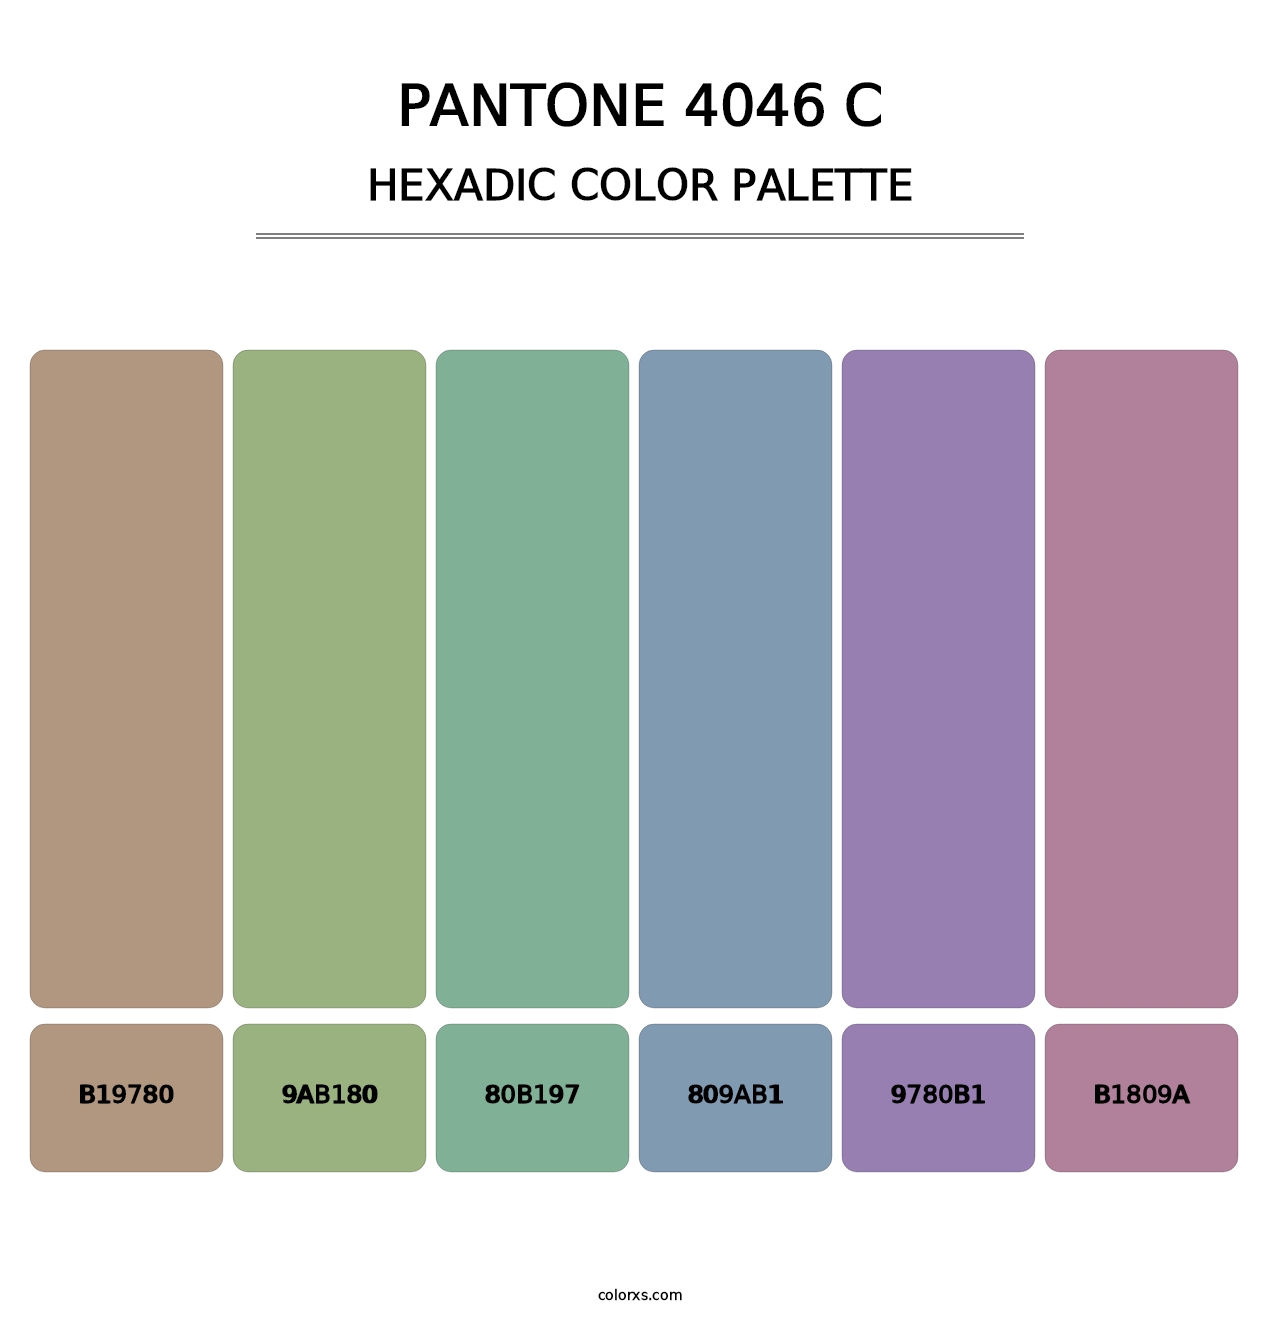 PANTONE 4046 C - Hexadic Color Palette